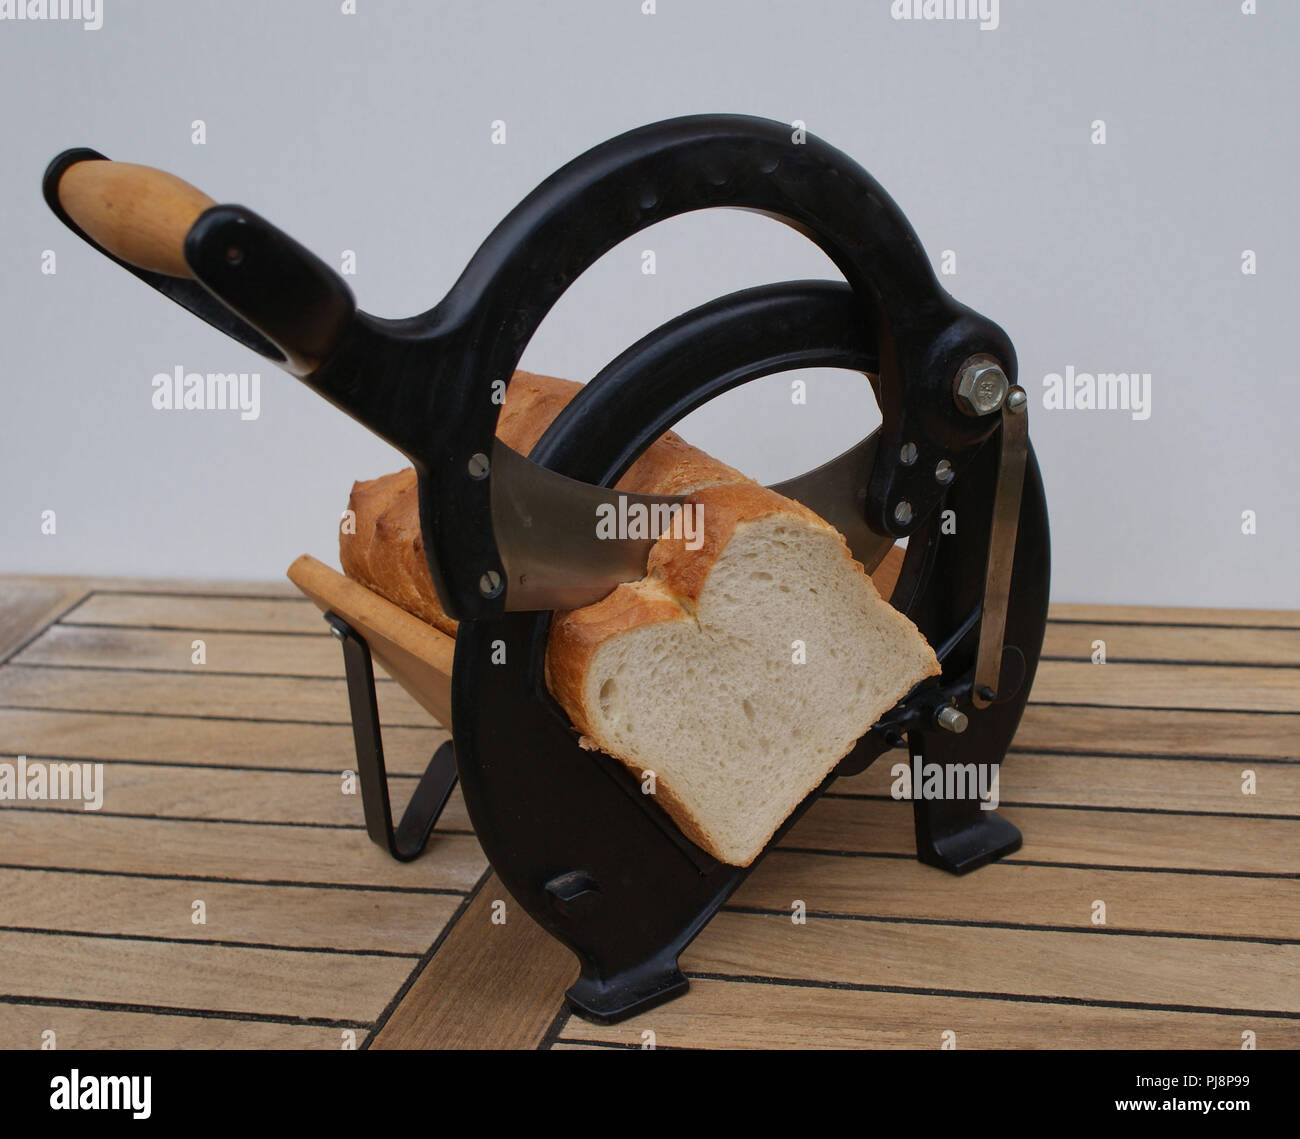 https://c8.alamy.com/comp/PJ8P99/close-up-of-a-vintage-danish-bread-slicer-with-a-danish-white-bread-PJ8P99.jpg